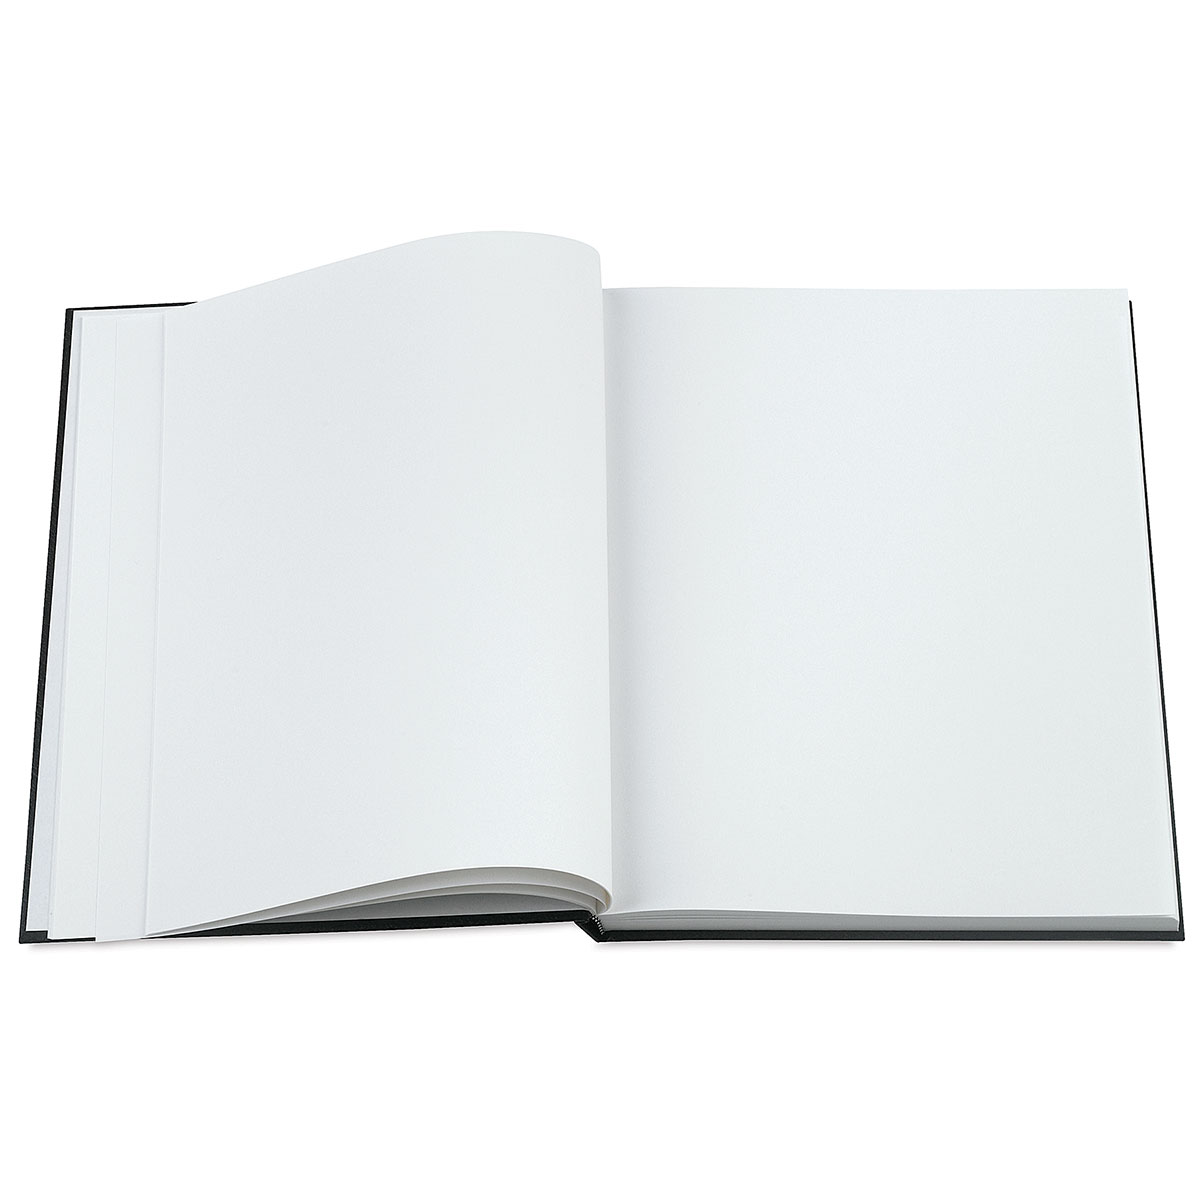 Canson Universal Hardbound Sketchbook - 4 x 6, 108 Sheets